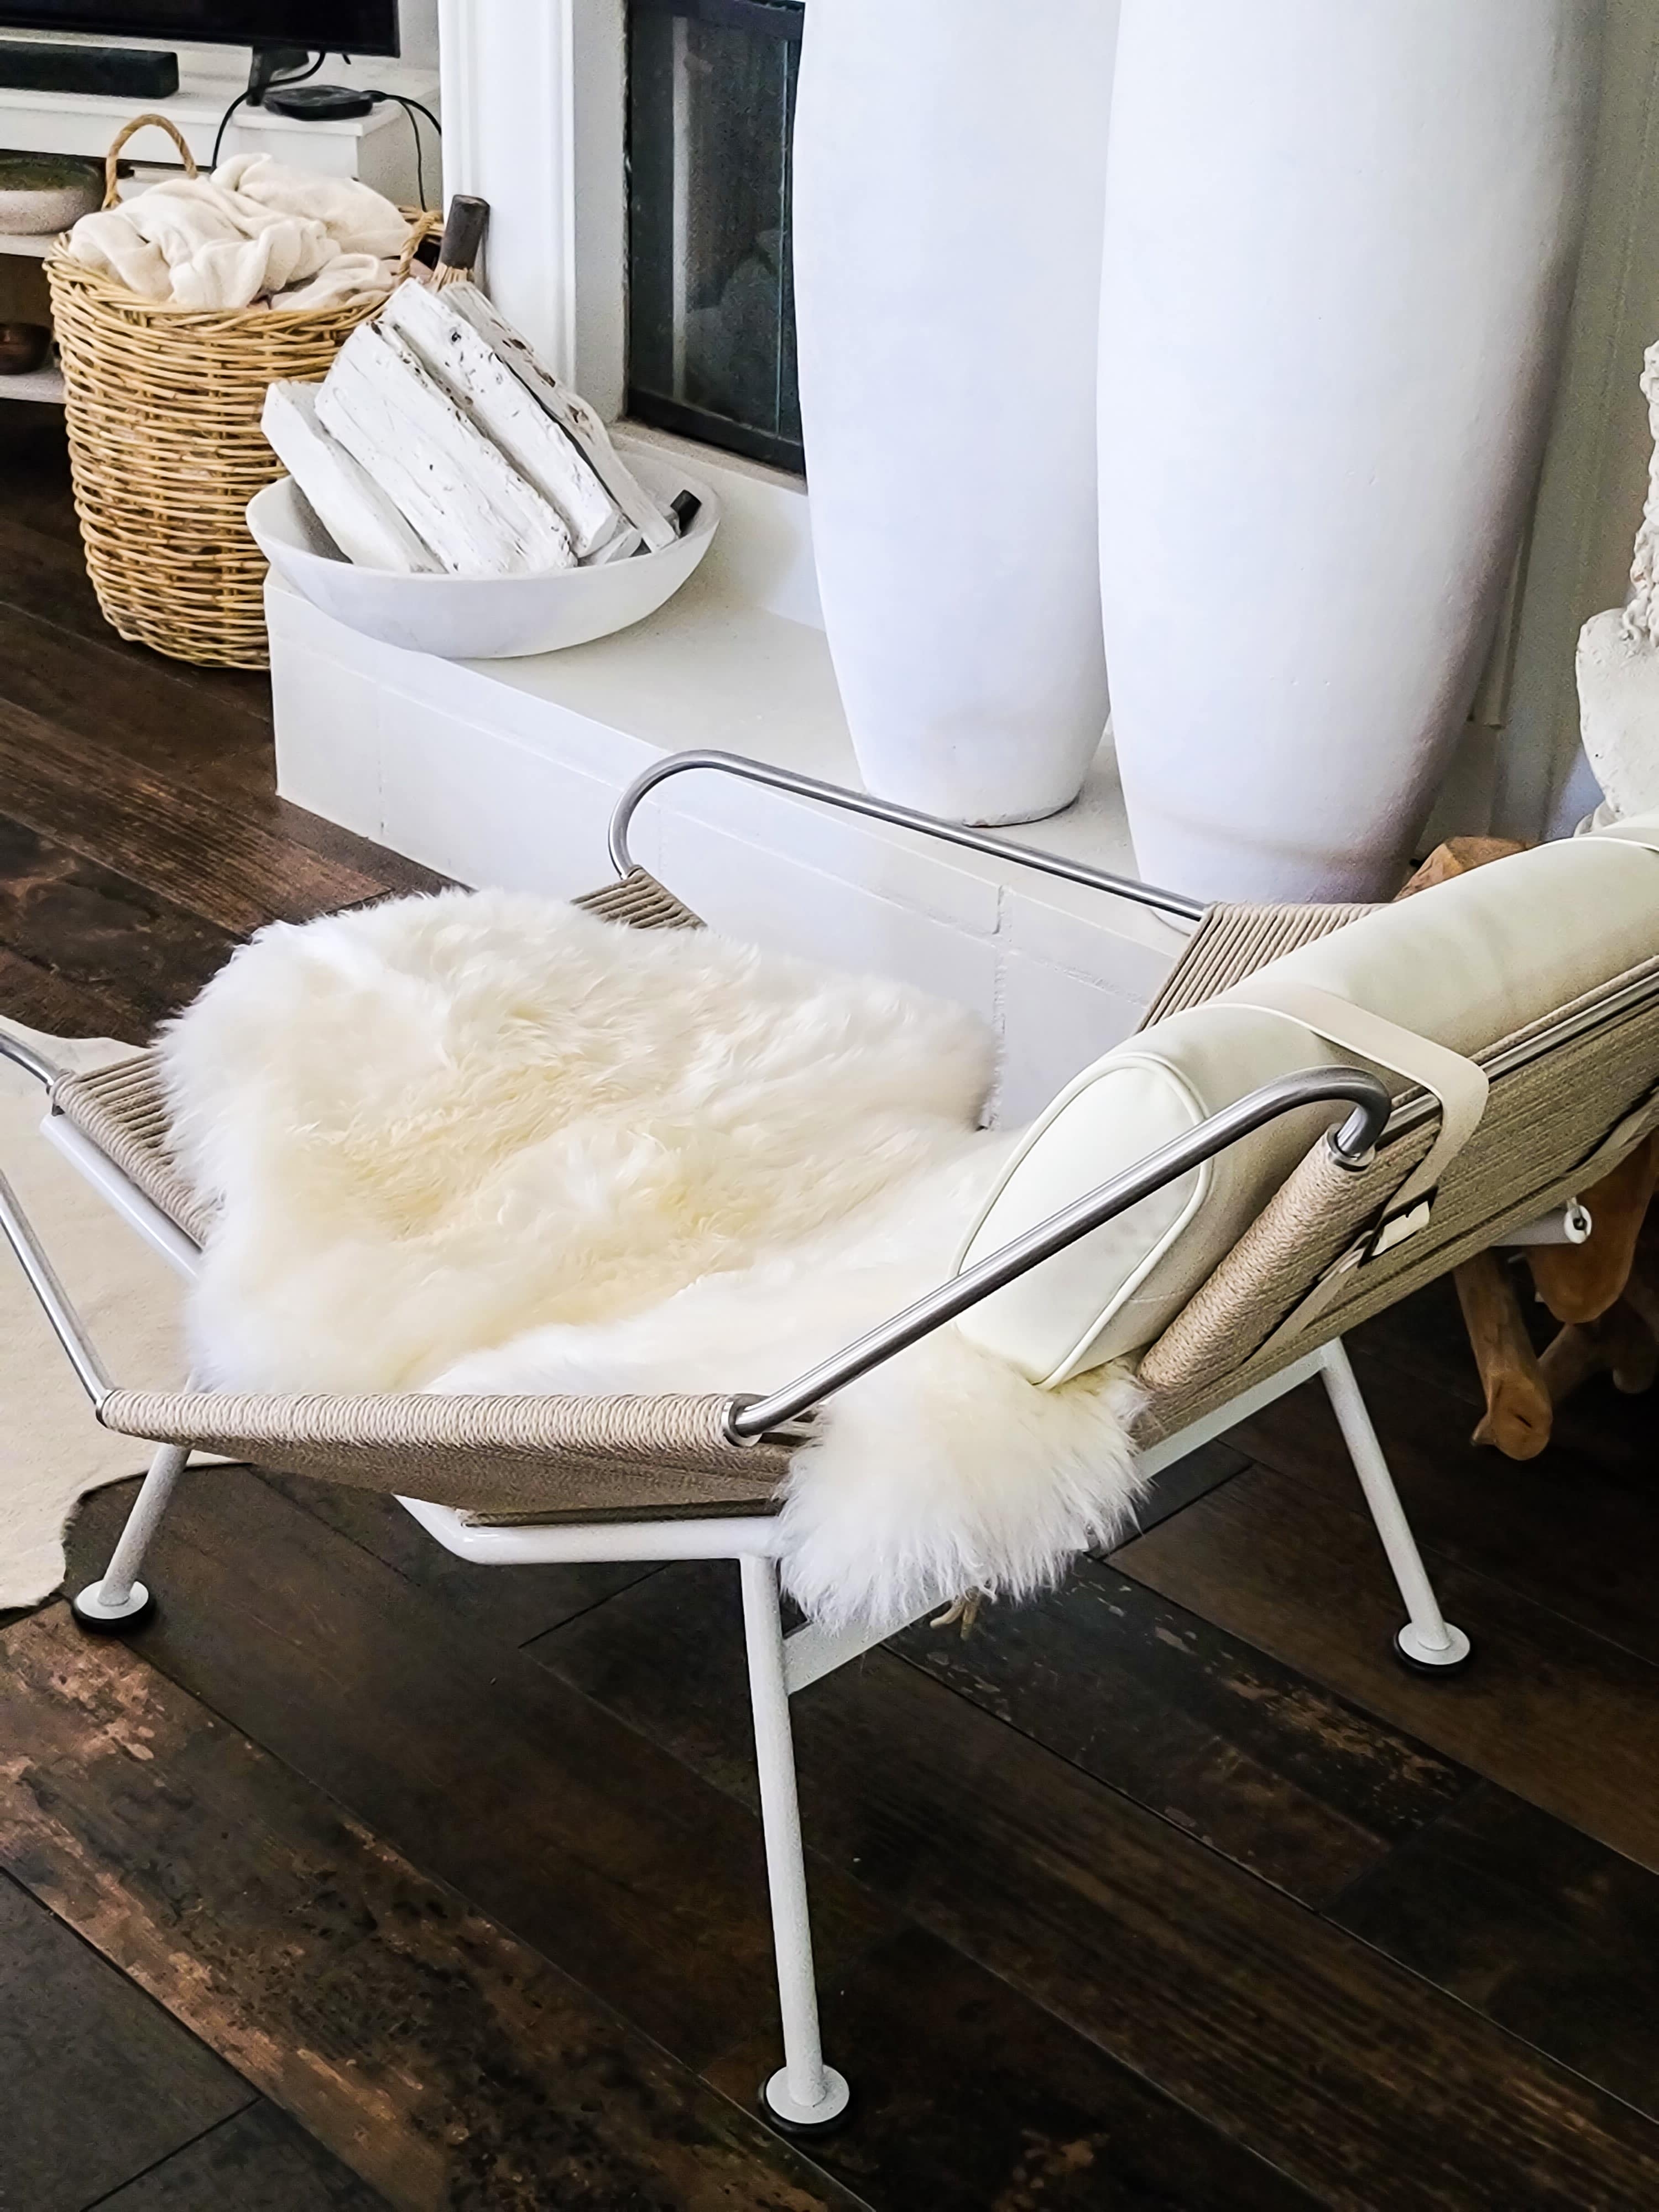 beautiful midcentury modern livingr room with scandinavian japandi eclectic style decor hans wegner inspired chair cozy chic modern